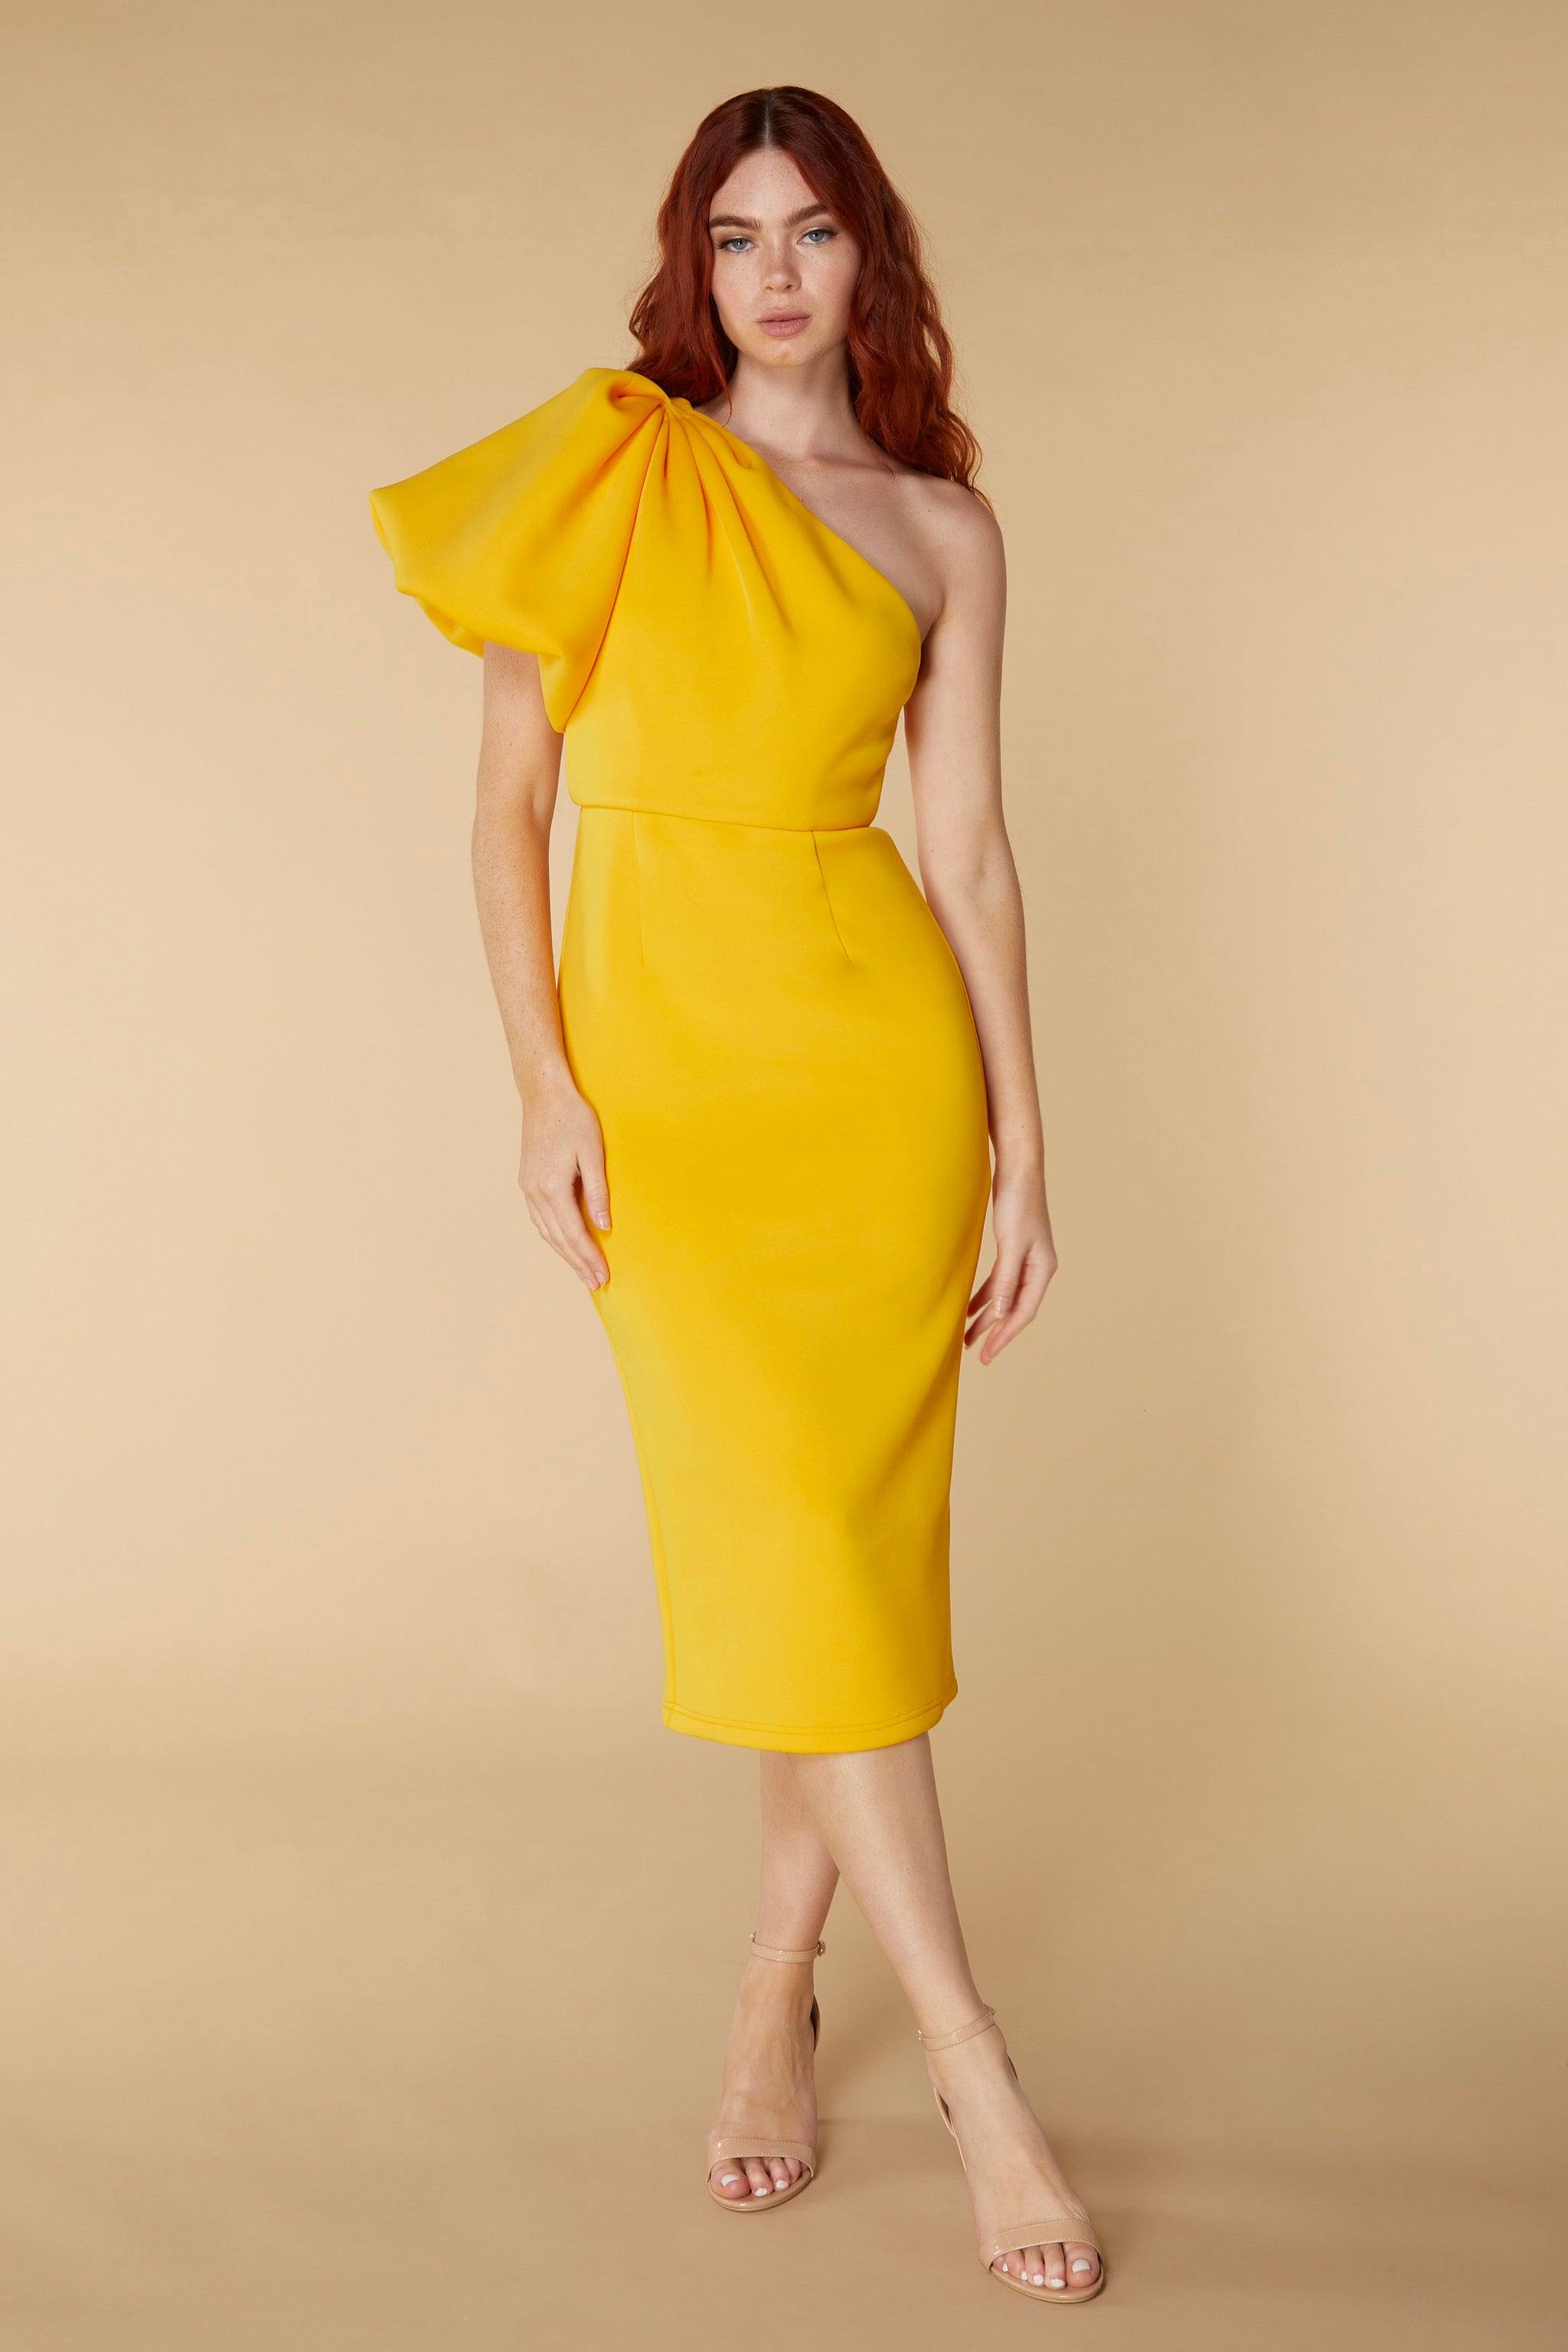 Velvette One Shoulder Exaggerated Puff Sleeve Scuba Midi Dress, UK 6 / US 2 / EU 34 / Scuba Yellow